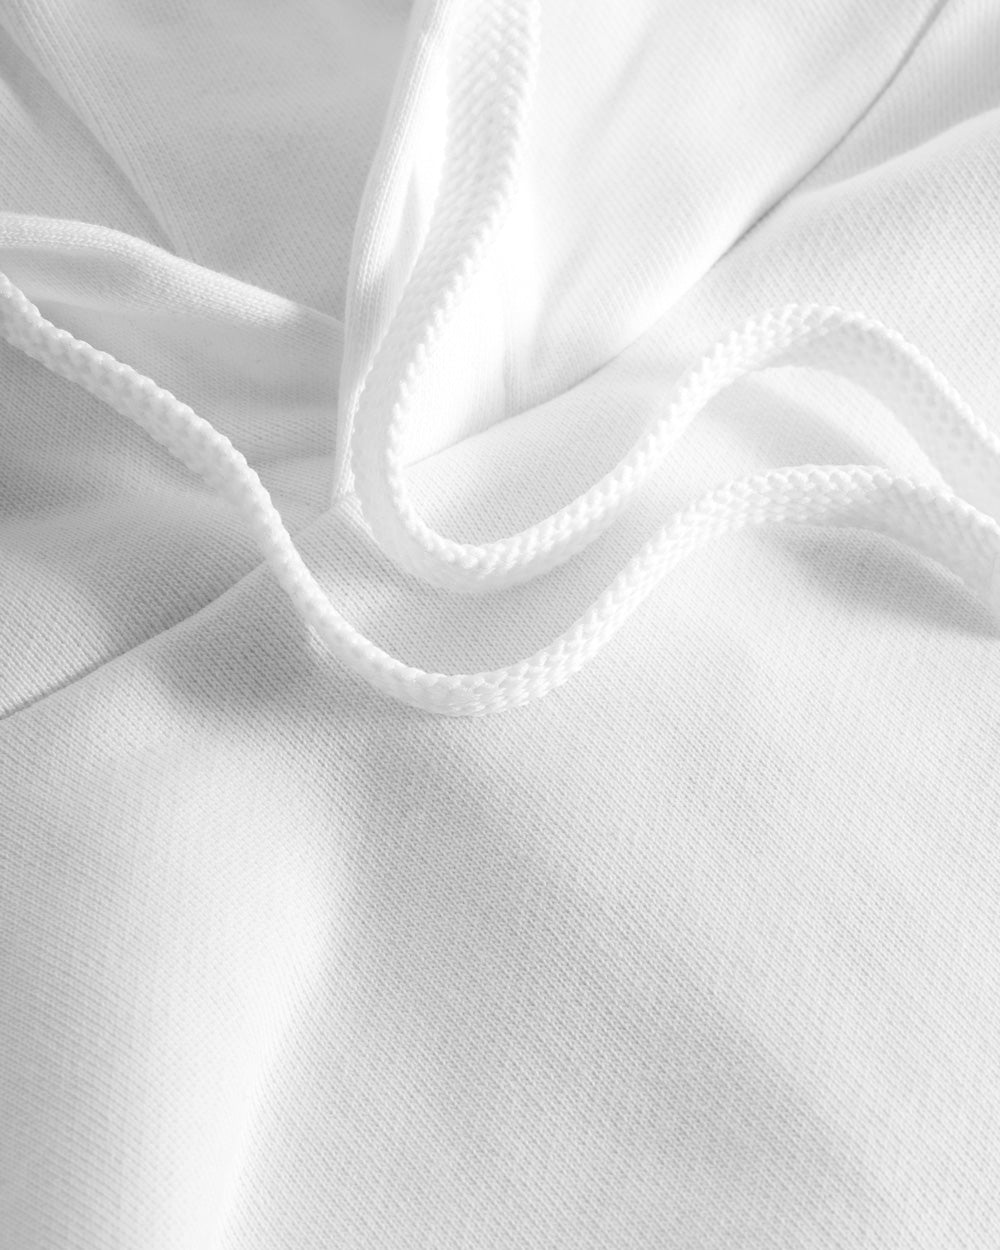 White drawstrings on white hoodie